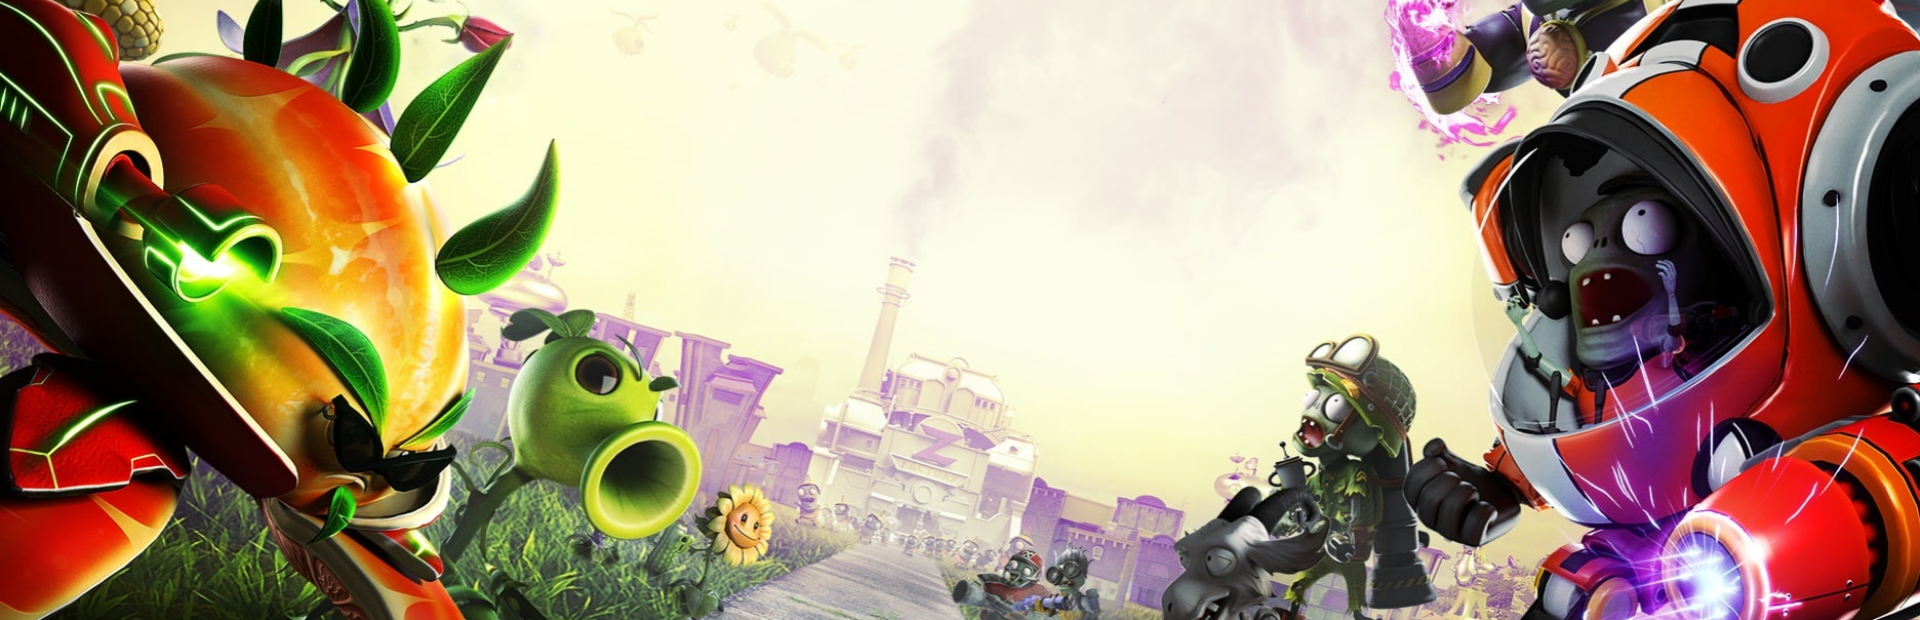 Plants vs. Zombies™ Garden Warfare 2 - Site Oficial